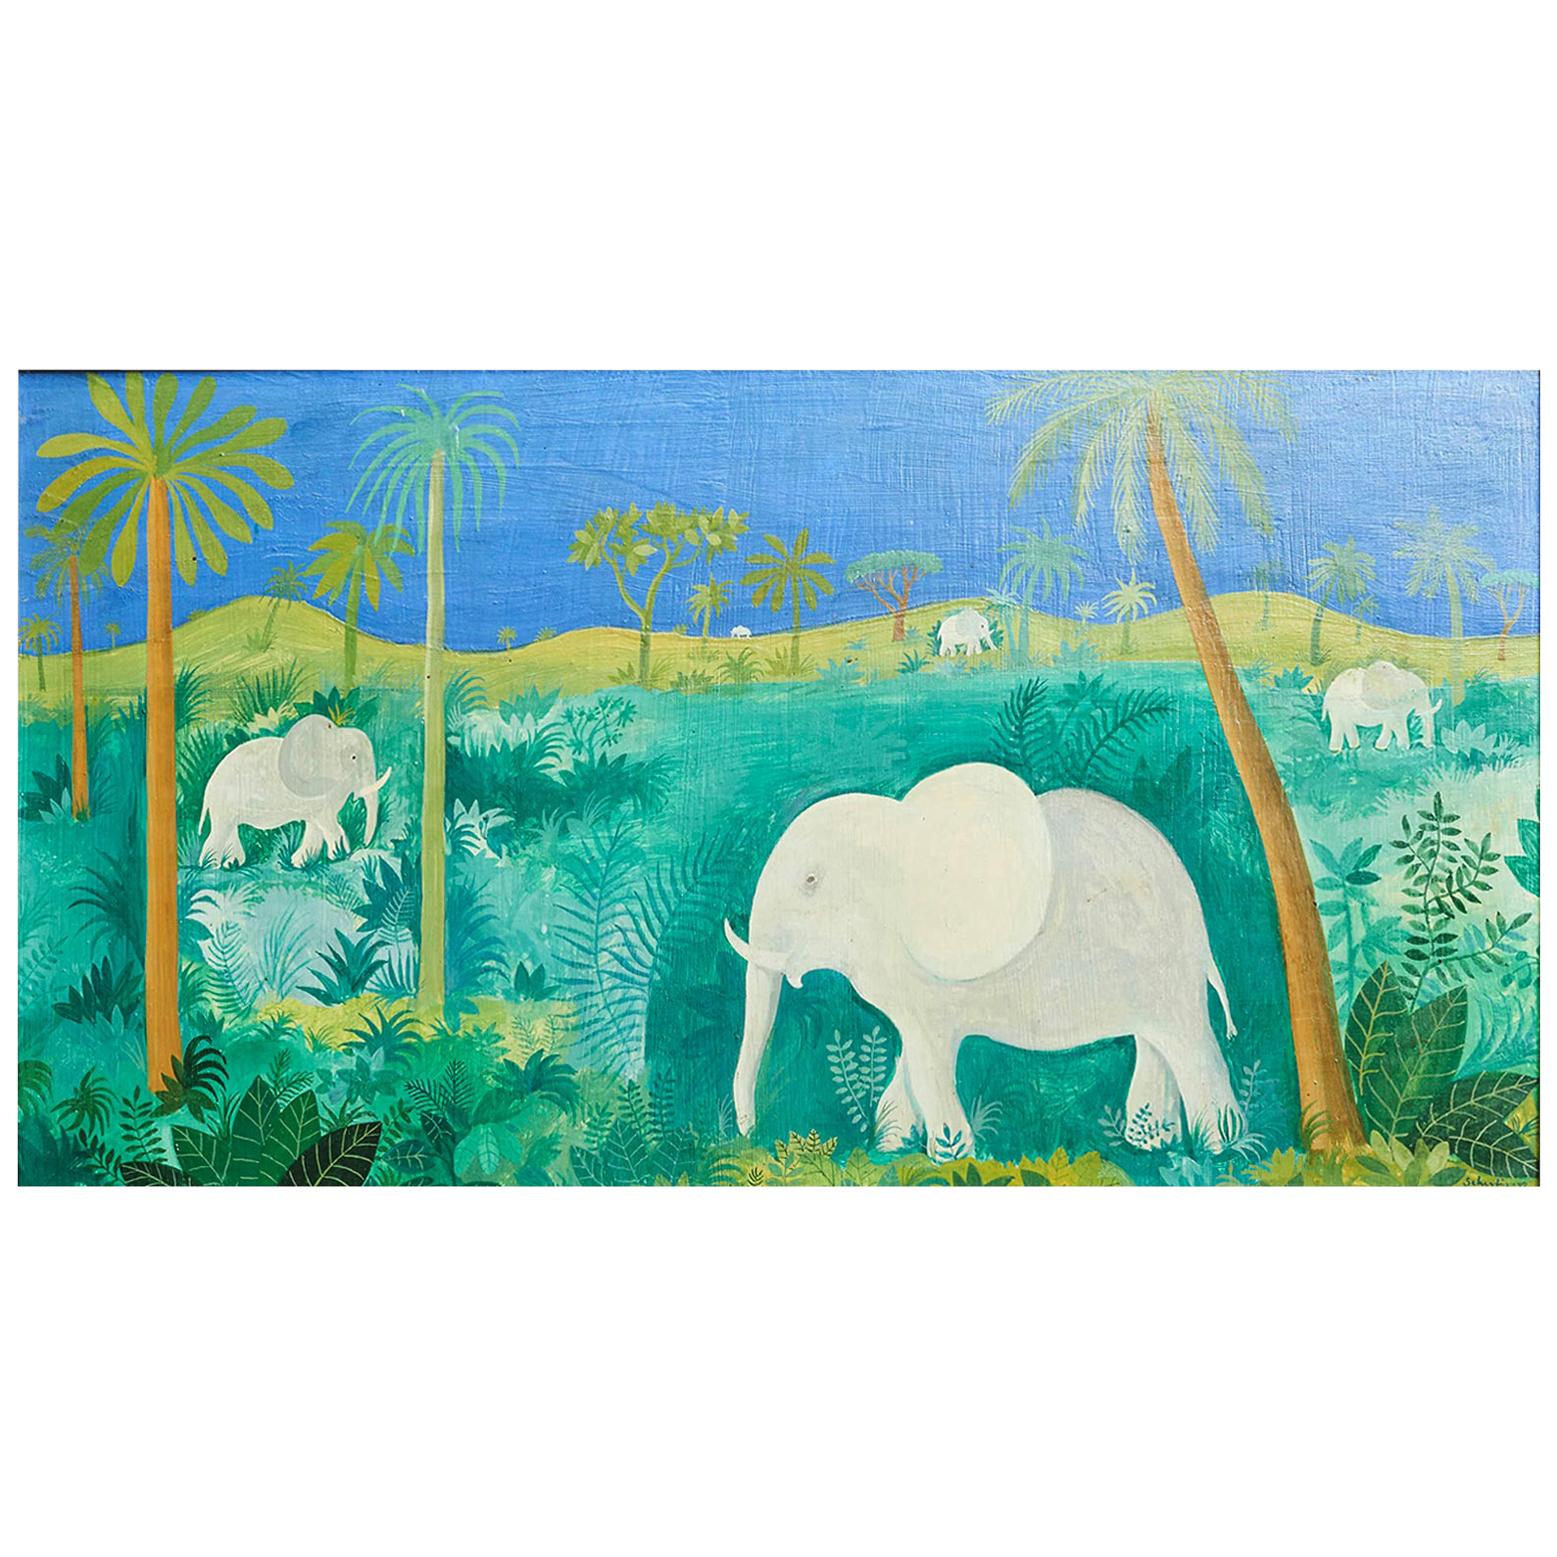 Original Hans Scherfig Painting of White Elephants in the Jungle, Denmark, 1947